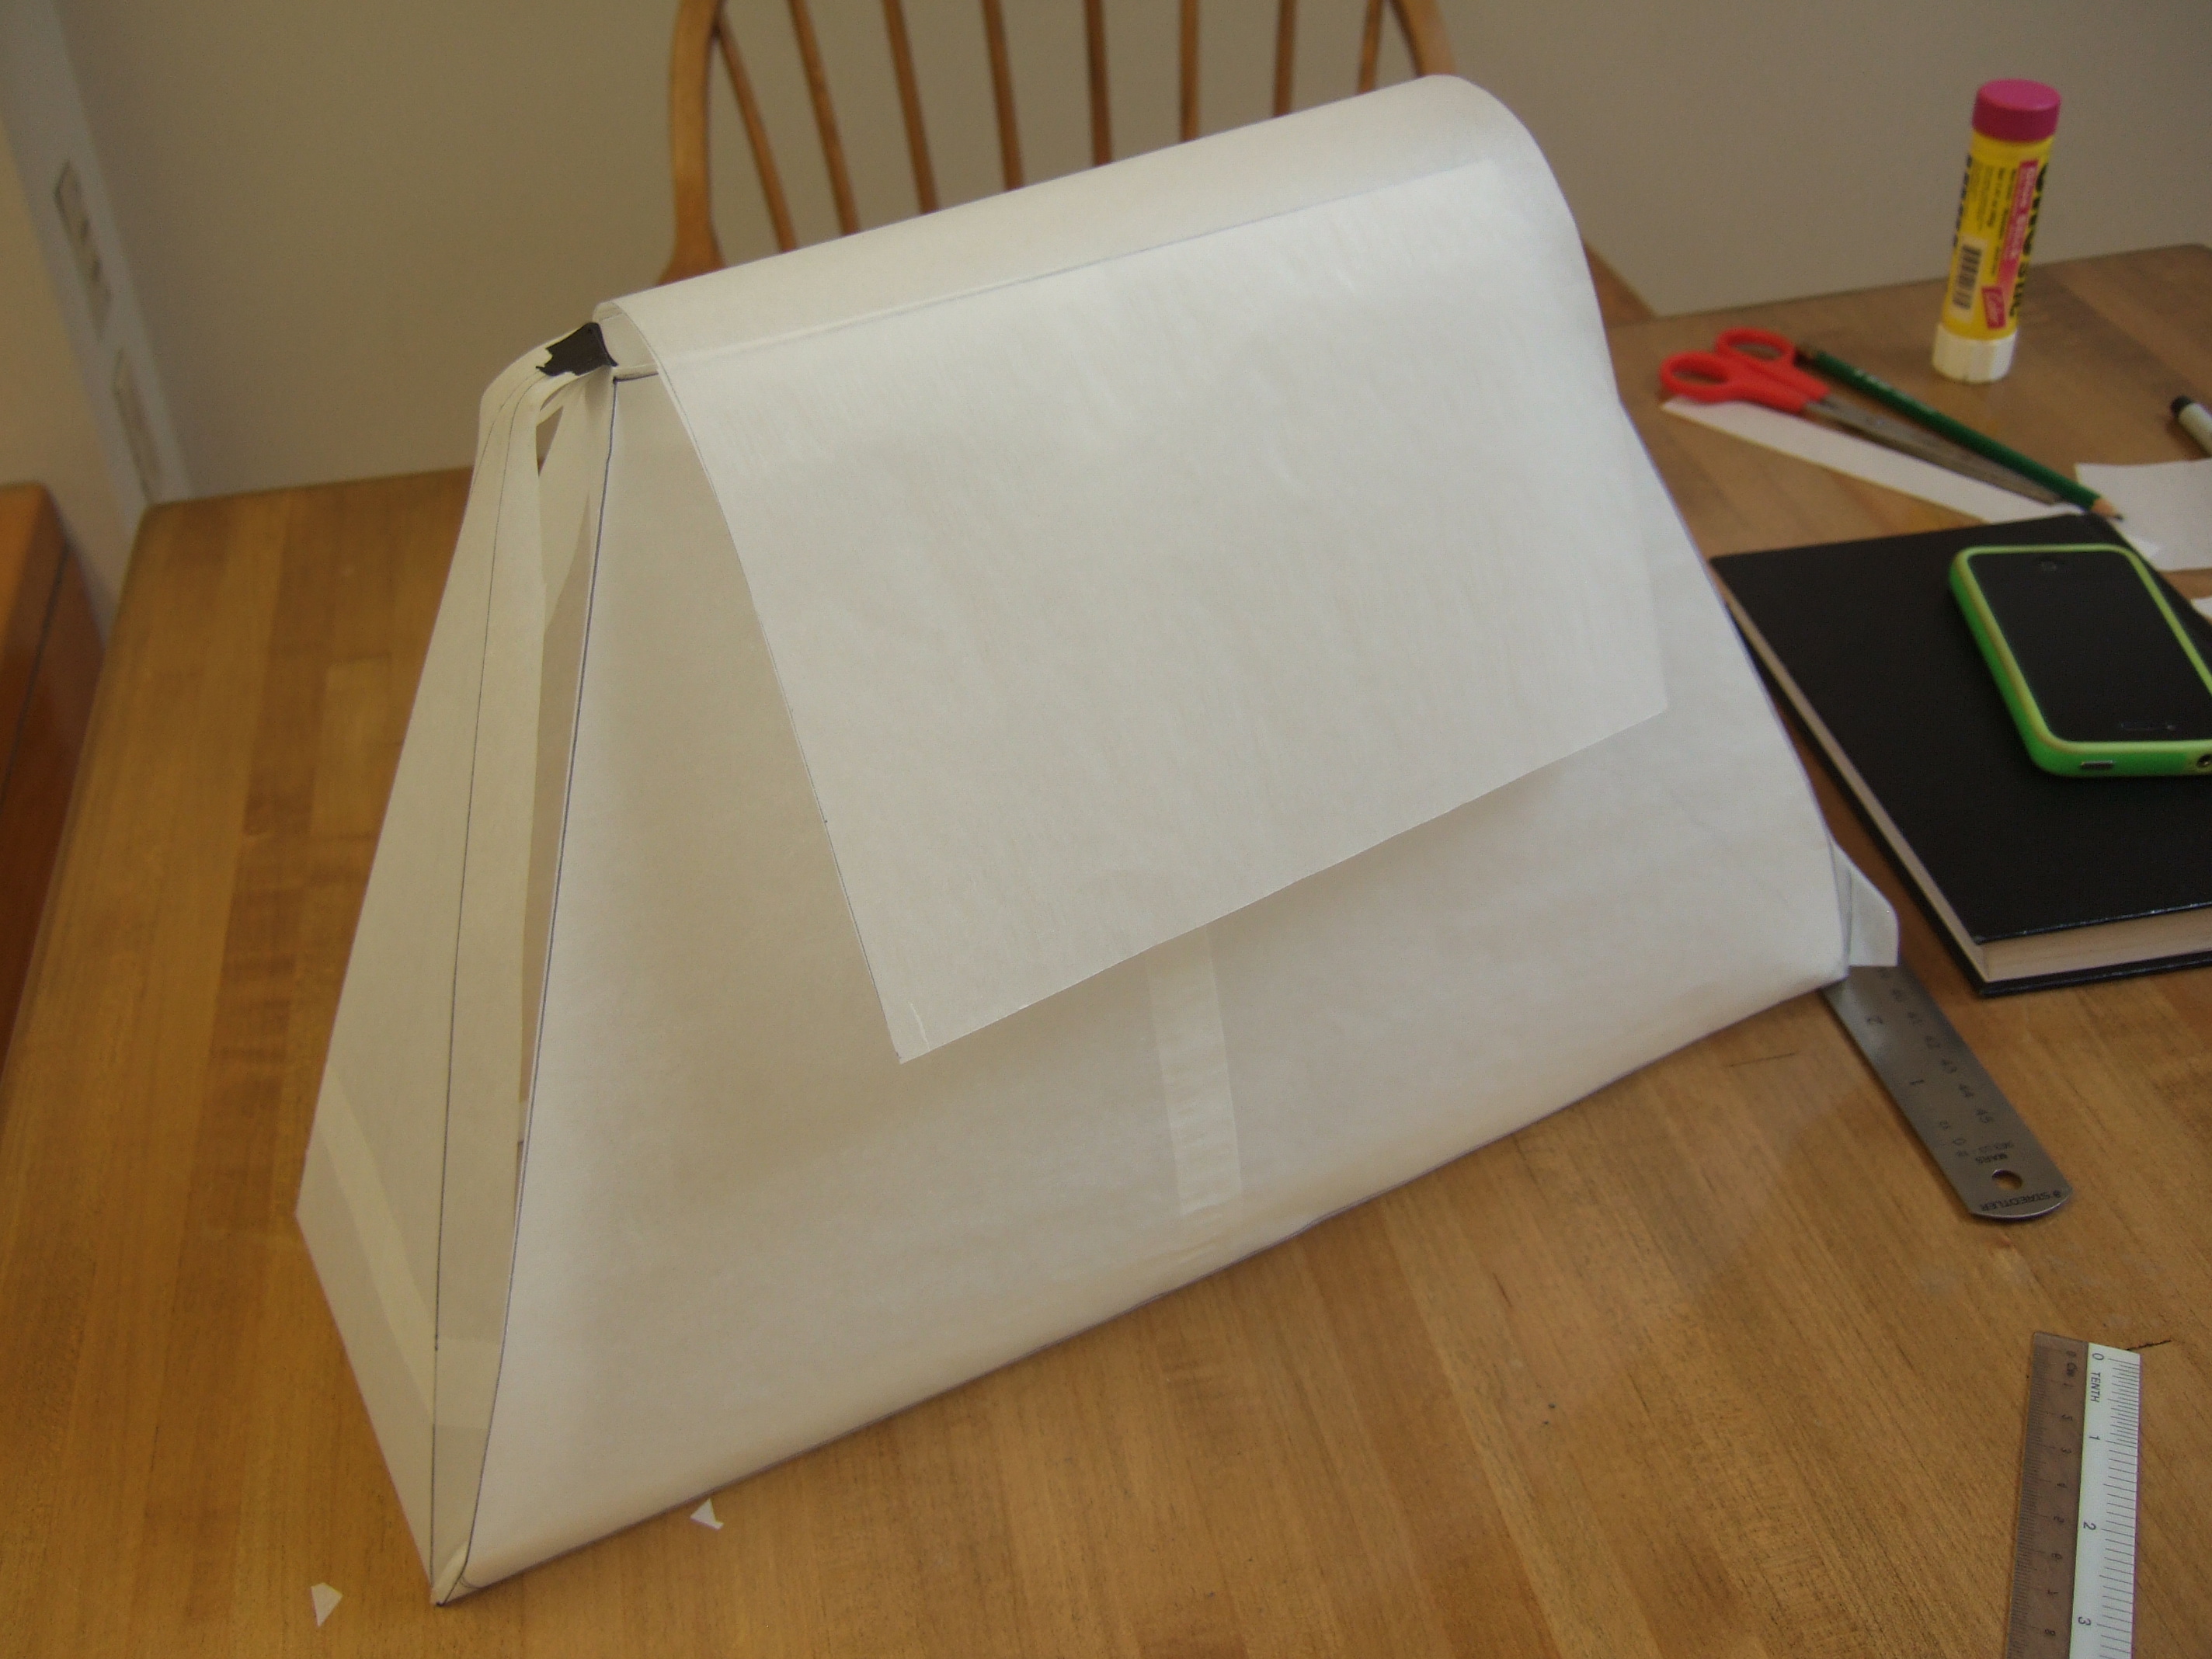 Bag paper prototype